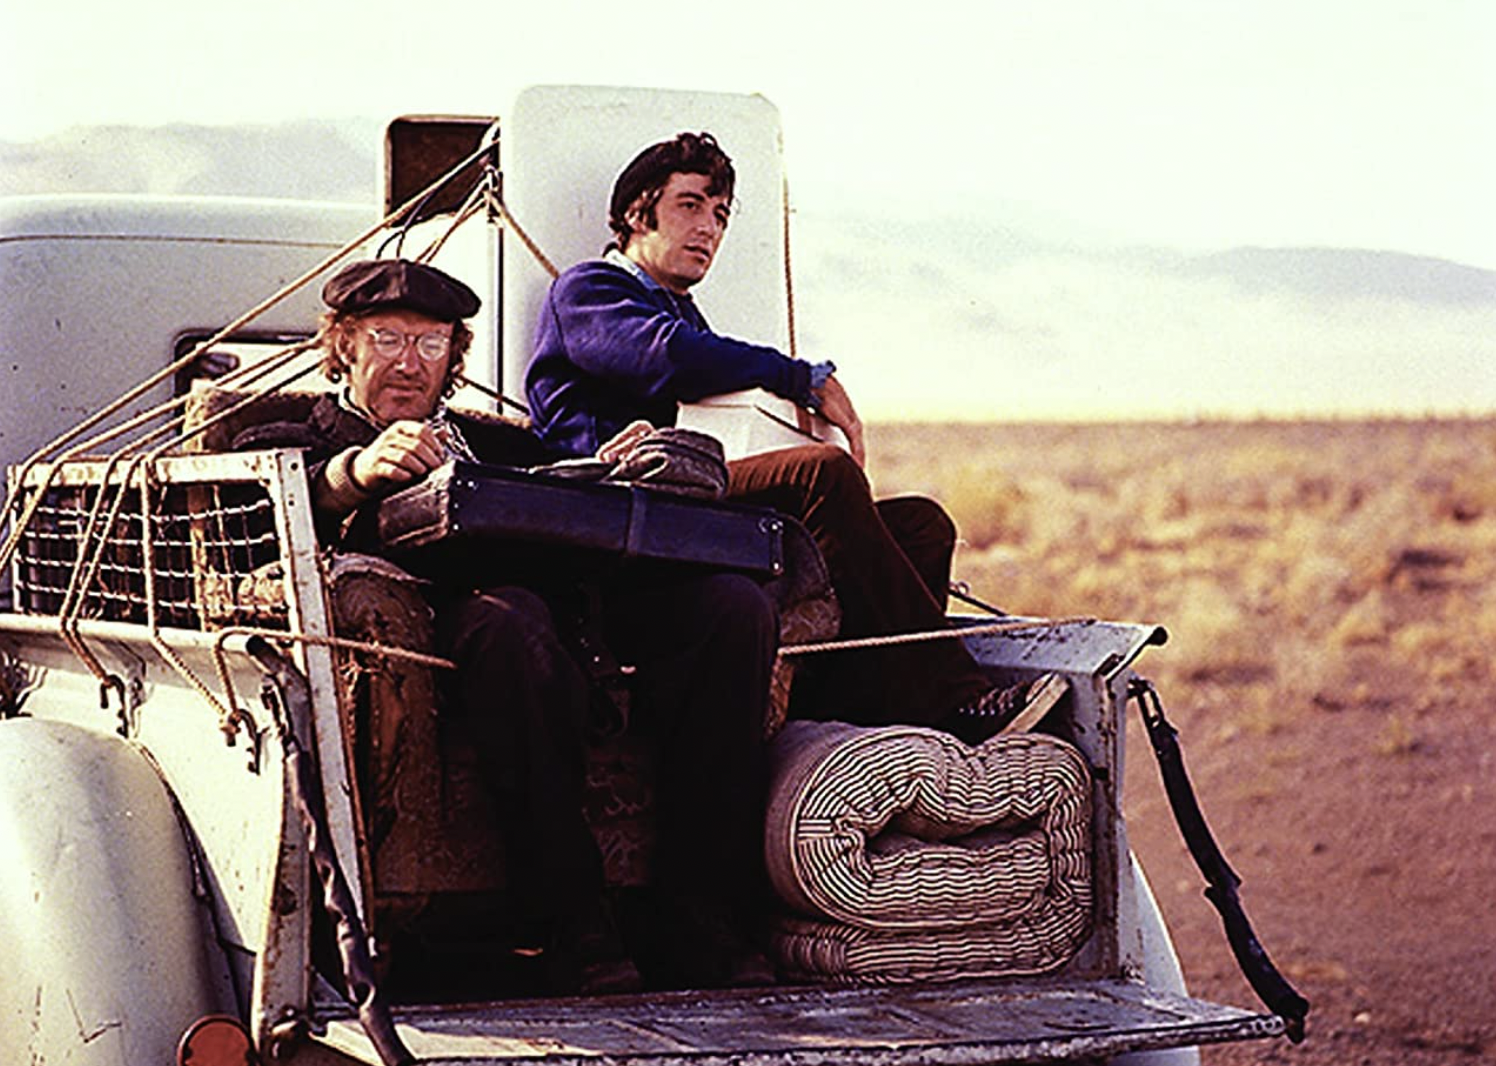 Al Pacino and Gene Hackman in "Scarecrow".